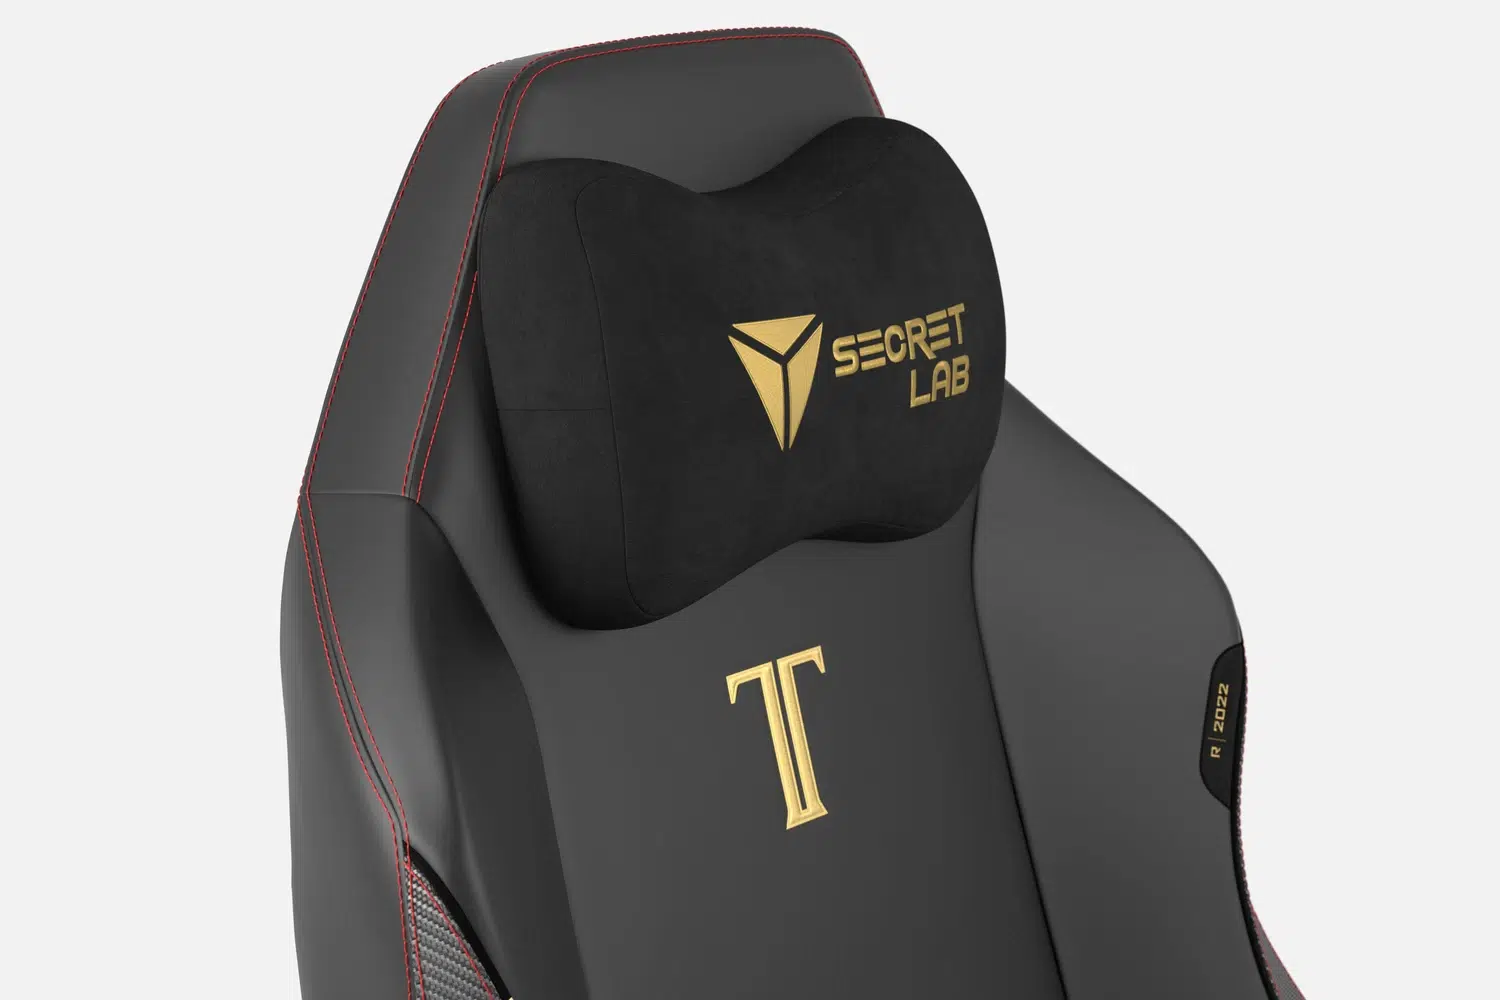 Secret Lab Titan Evo 2022 Stealth Pillow Chair sitting in a room